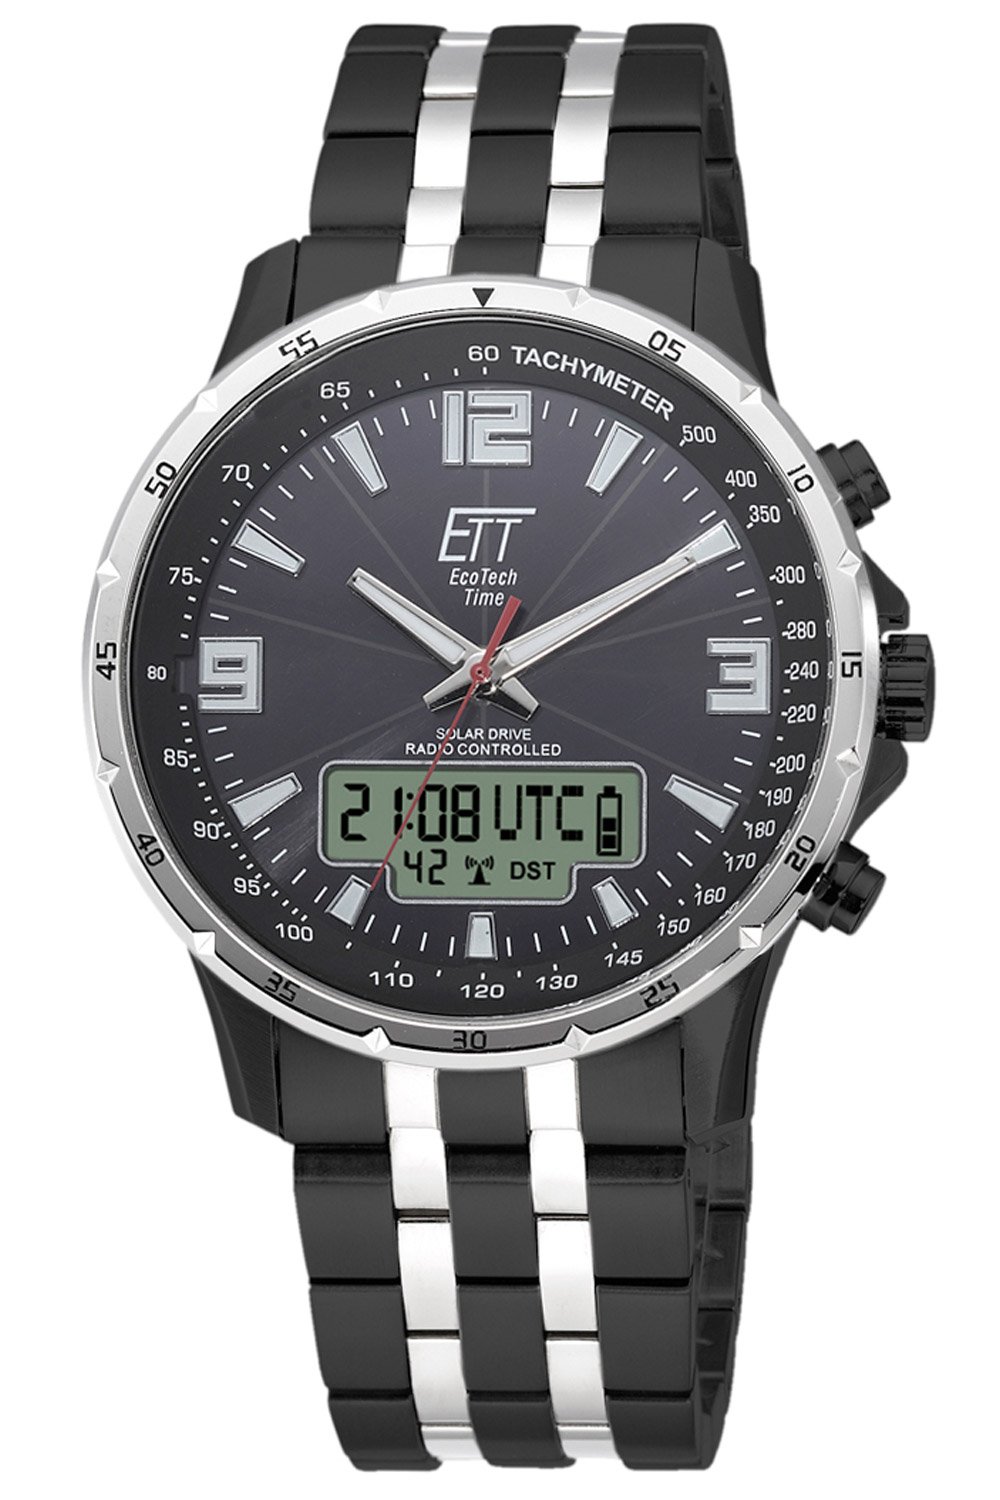 ETT Eco Tech Time Men\'s uhrcenter Radio-Controlled • EGS -11568-21M Solar Arctica Black/Steel Watch